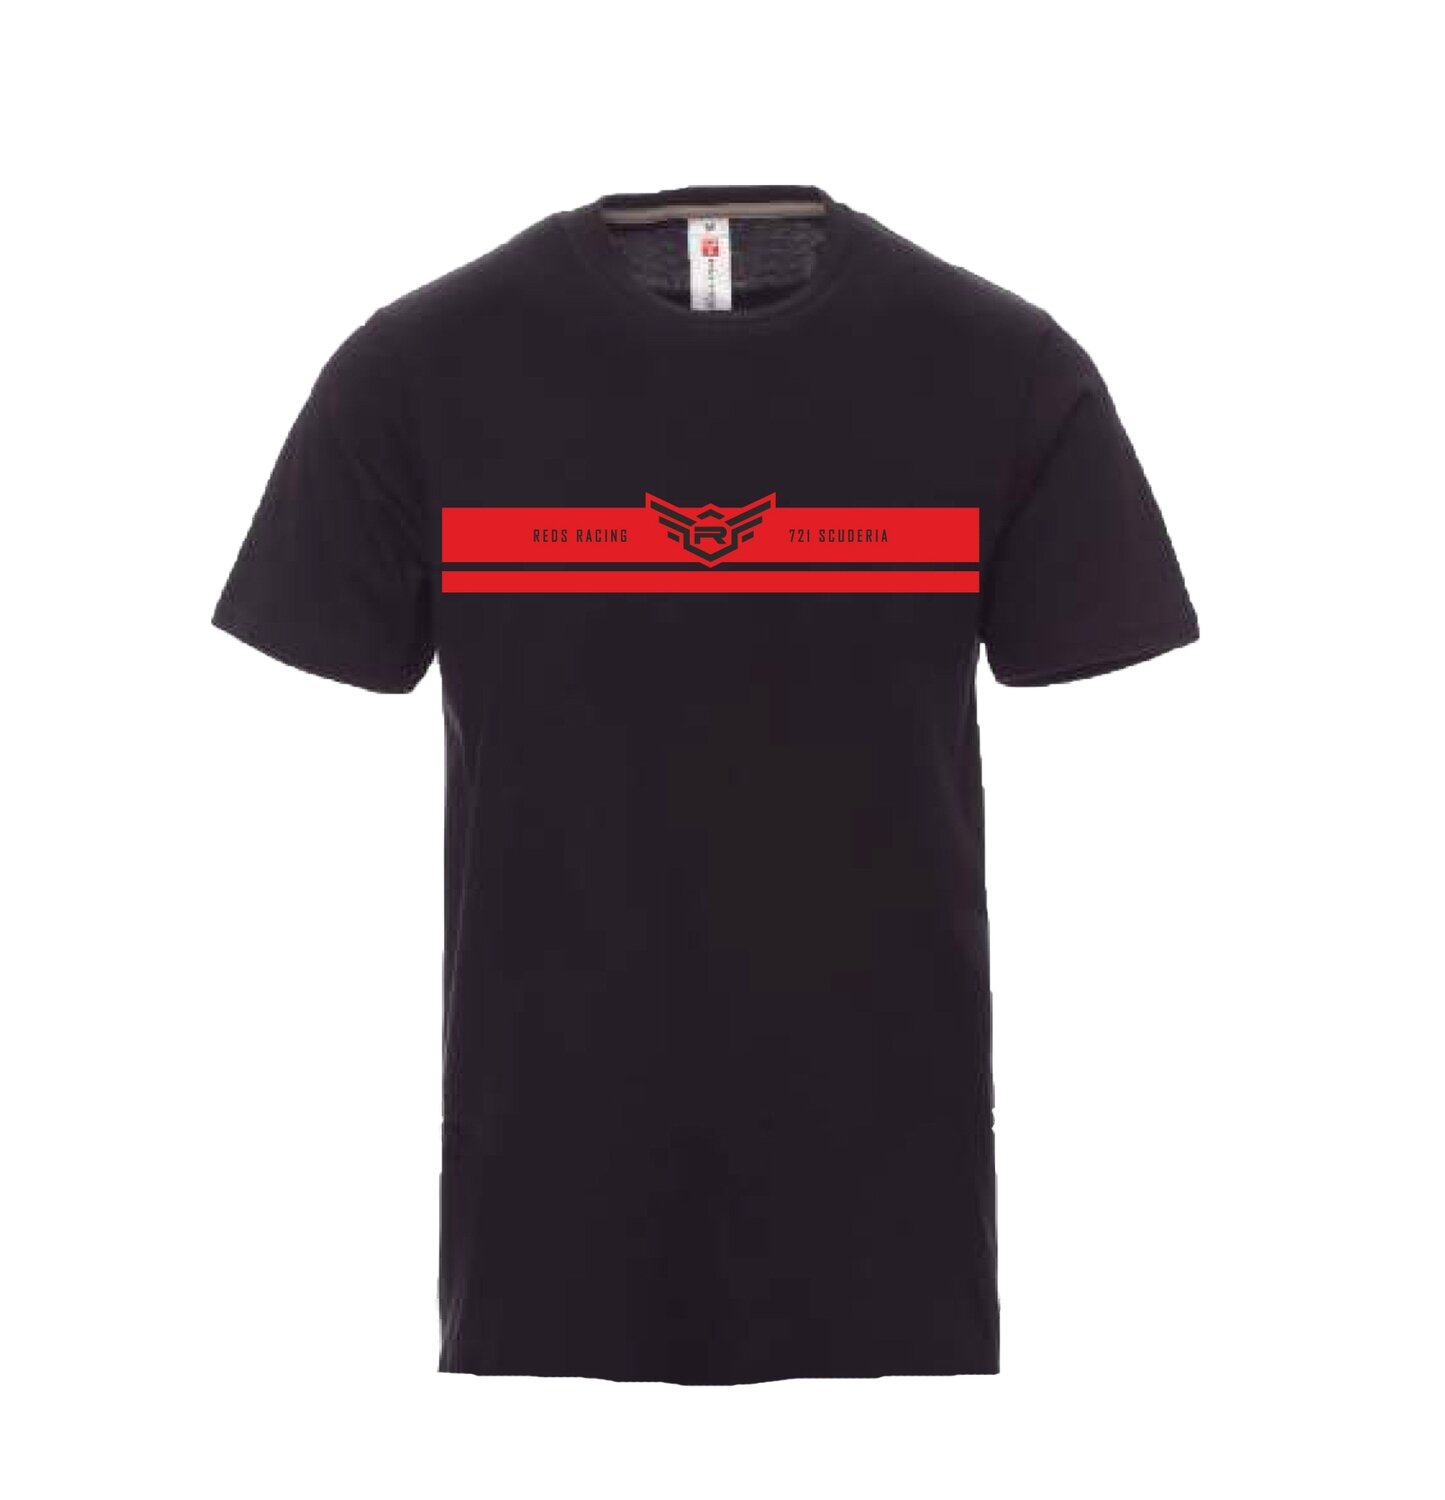 Camiseta Reds Racing Black/Red Talla M